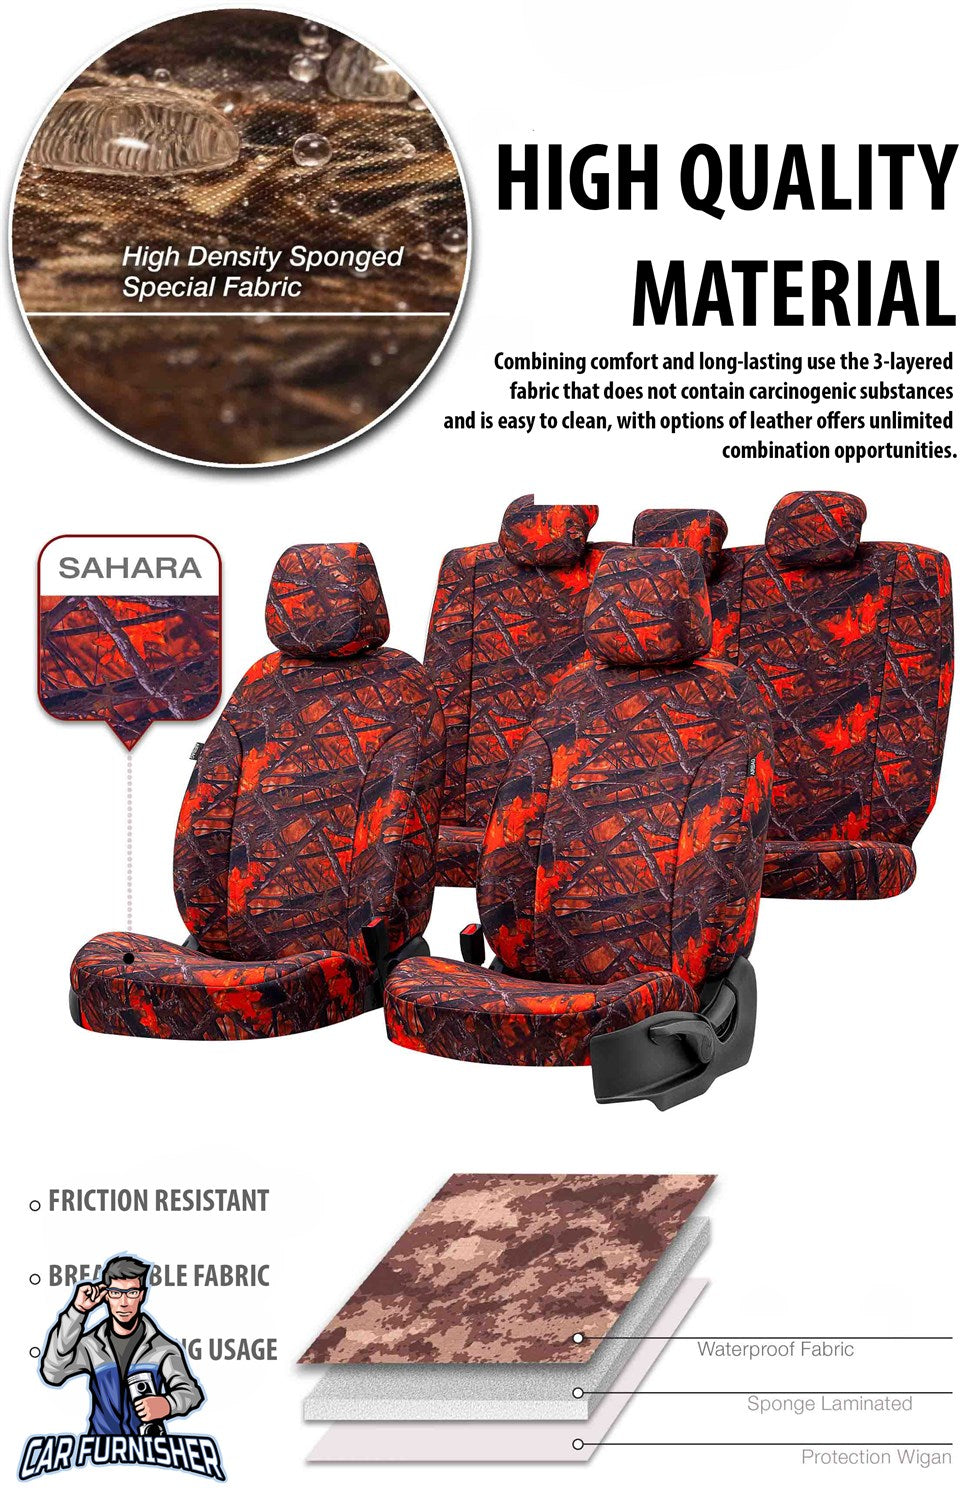 Bmw 1 Series Seat Cover Camouflage Waterproof Design Kalahari Camo Waterproof Fabric